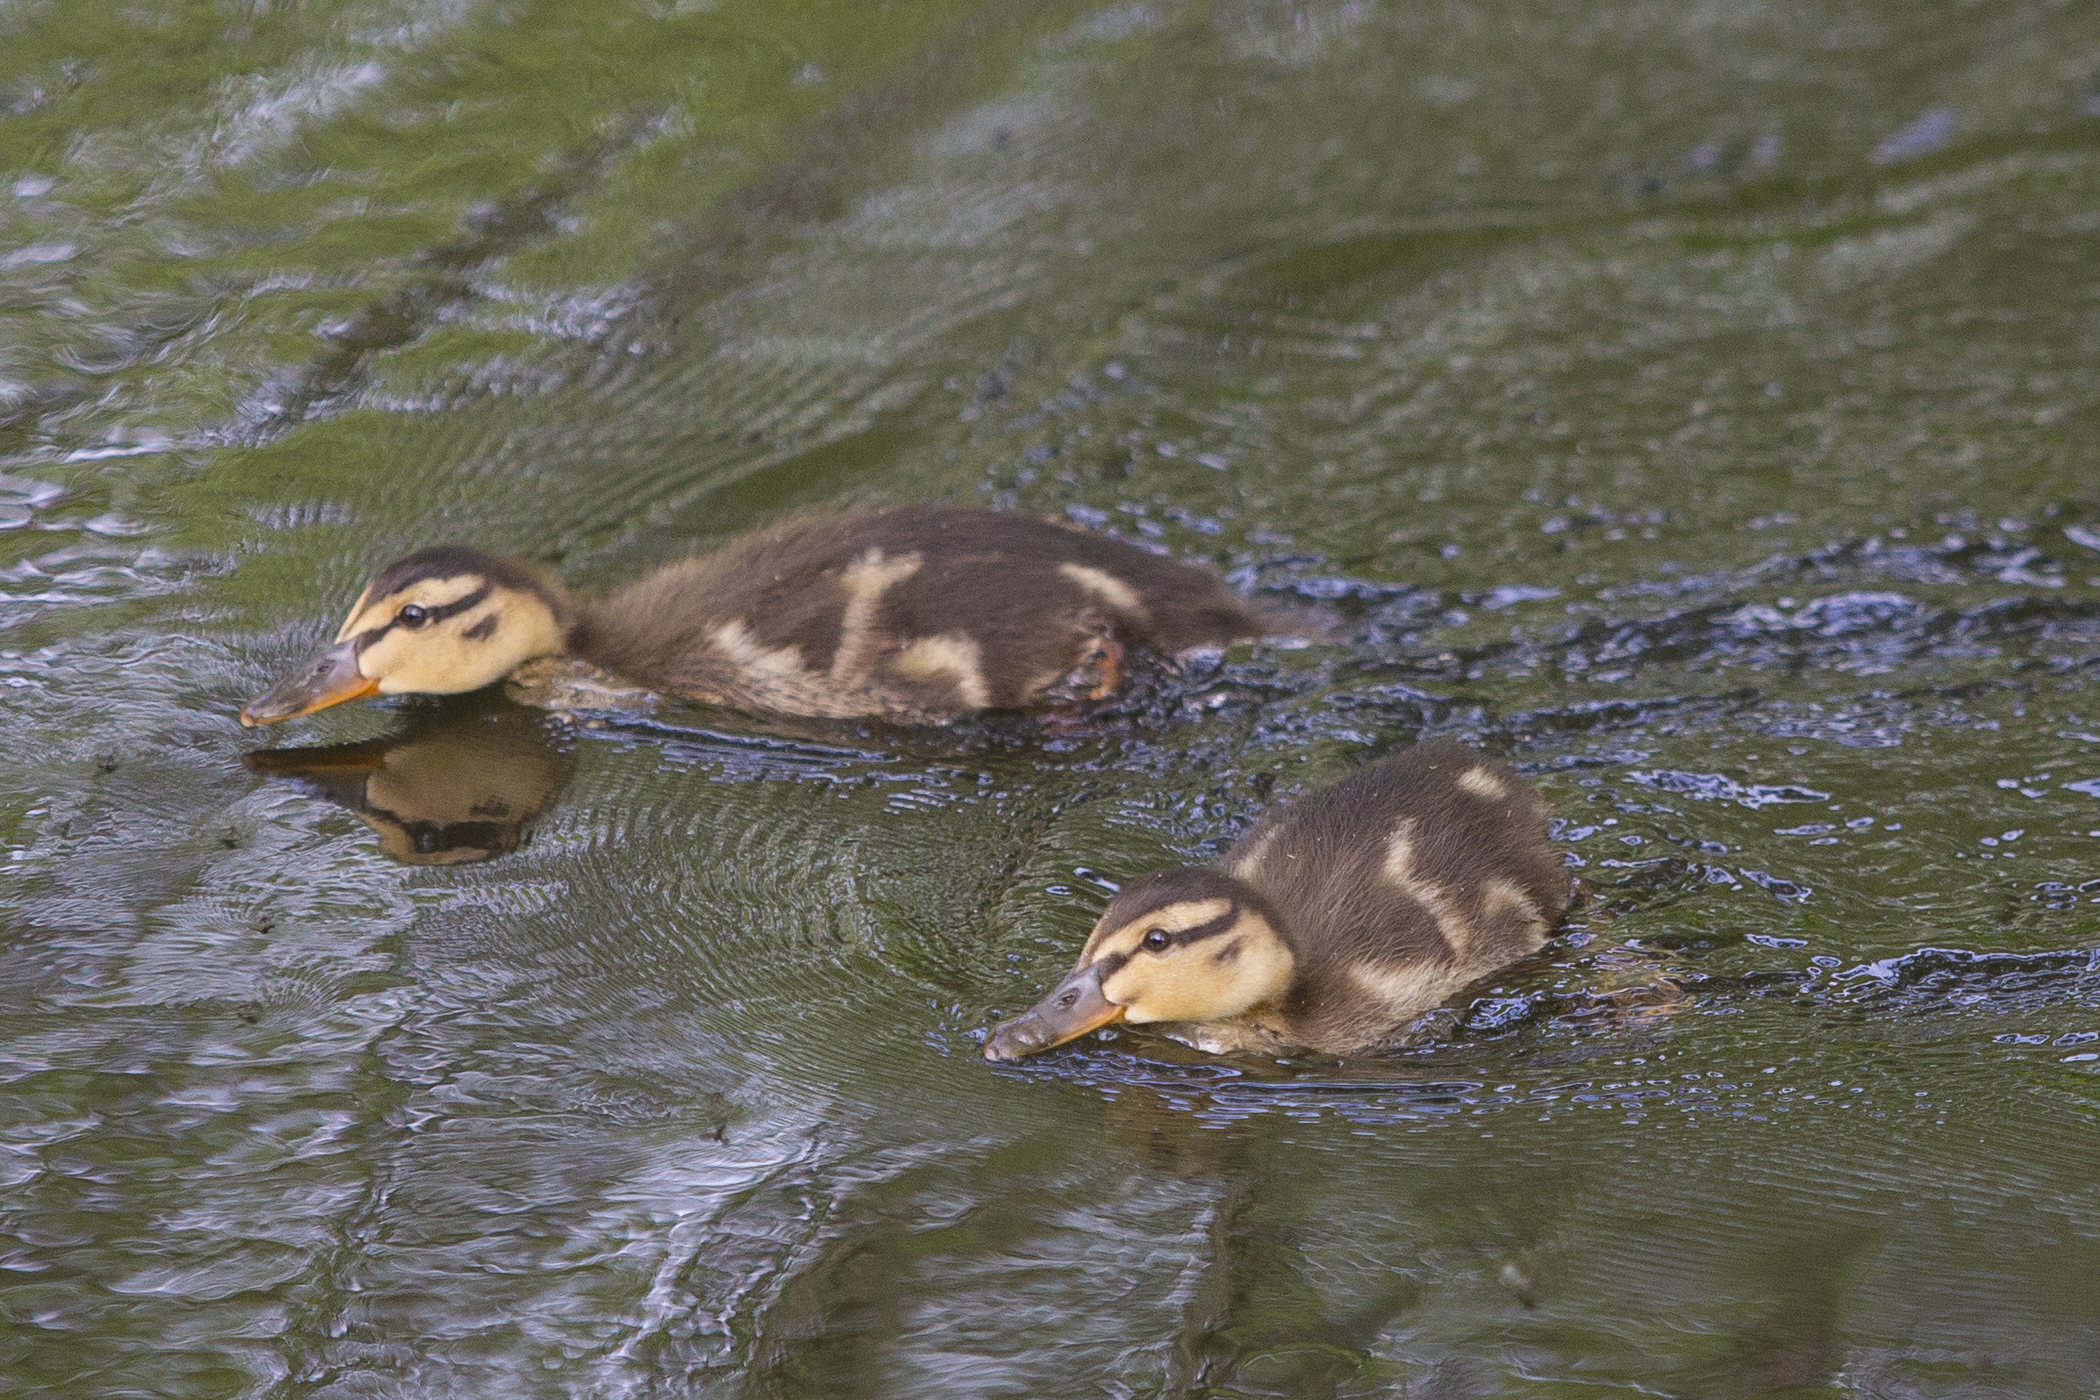 Mallard chicks in the water